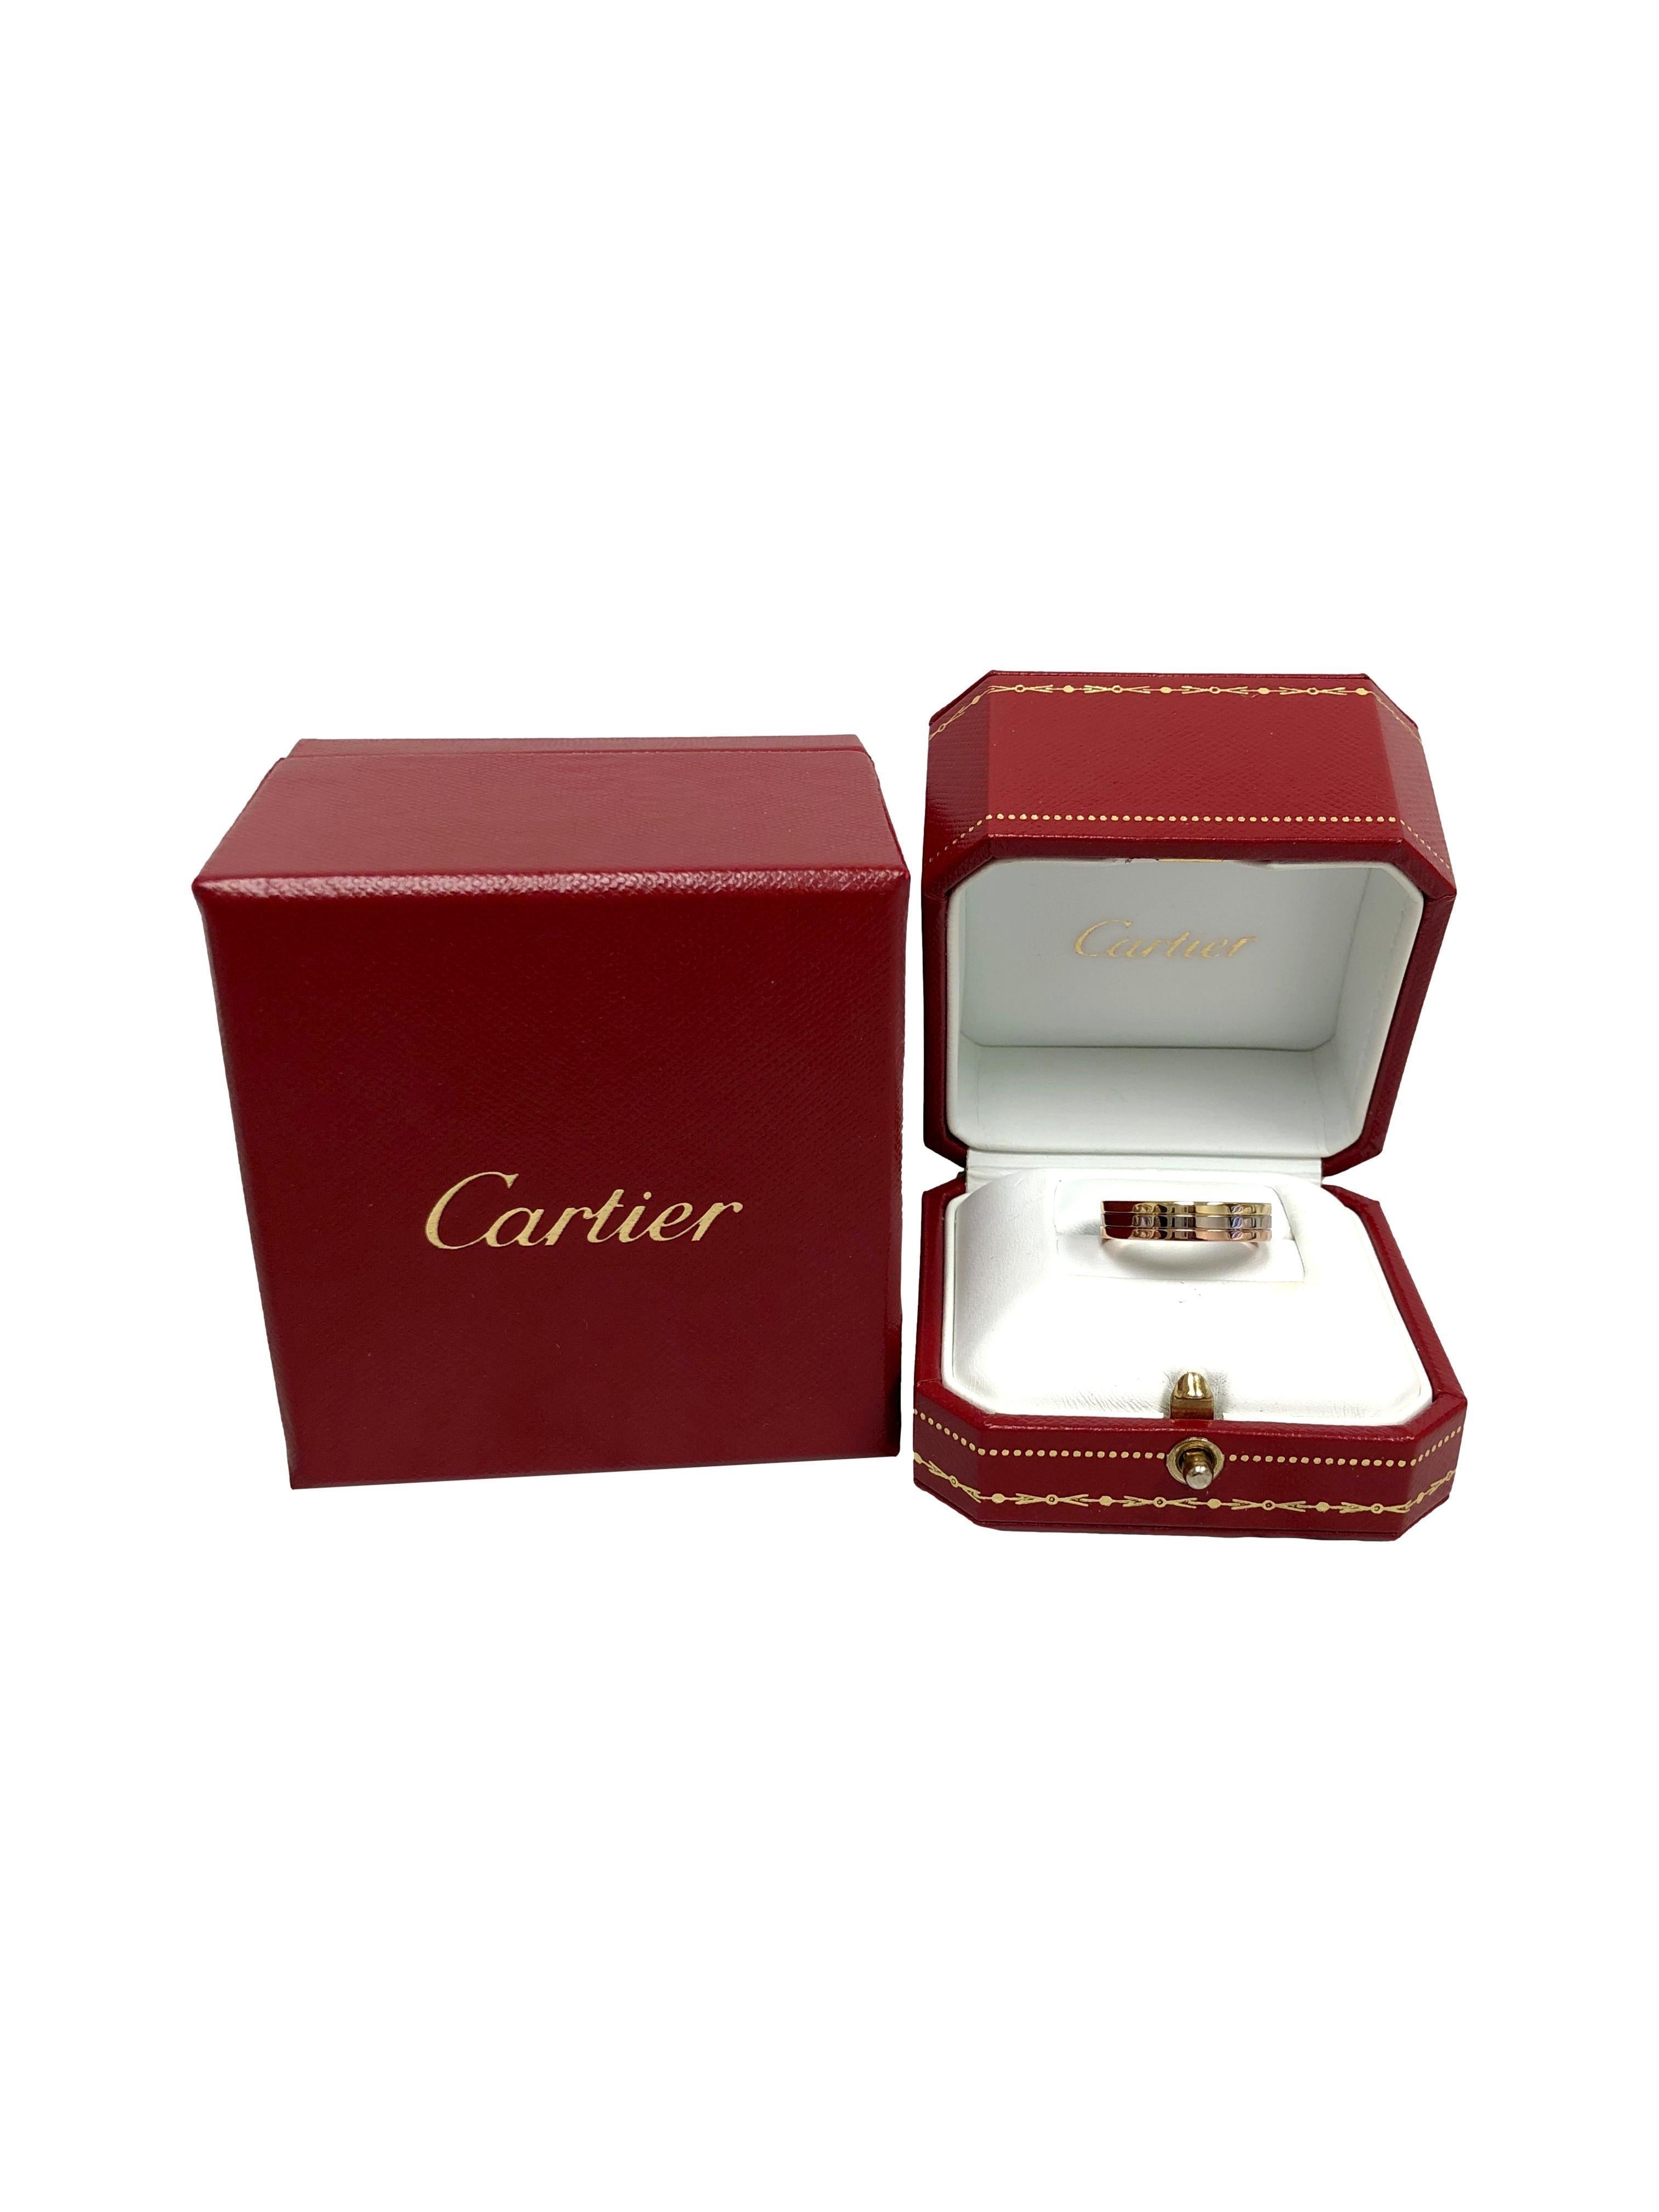 Vendome Louis Cartier 18K 3 Tone Gold Men's Wedding Band Ring Size 56/7.5 4.8mm For Sale 1